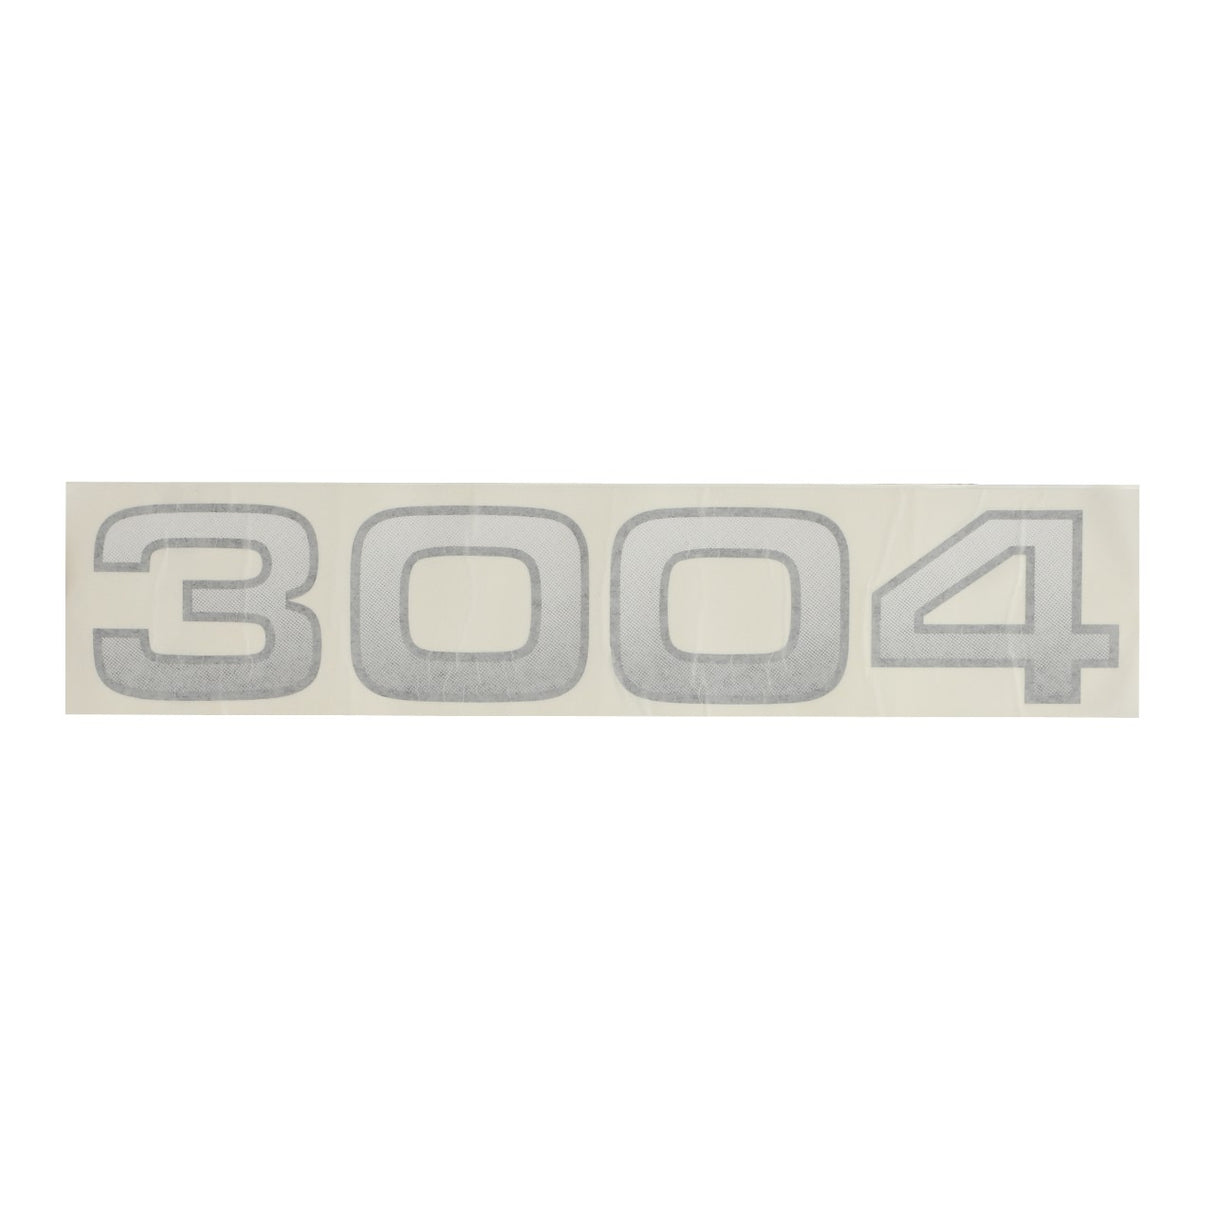 AGCO | Decal - Acw4045000 - Farming Parts